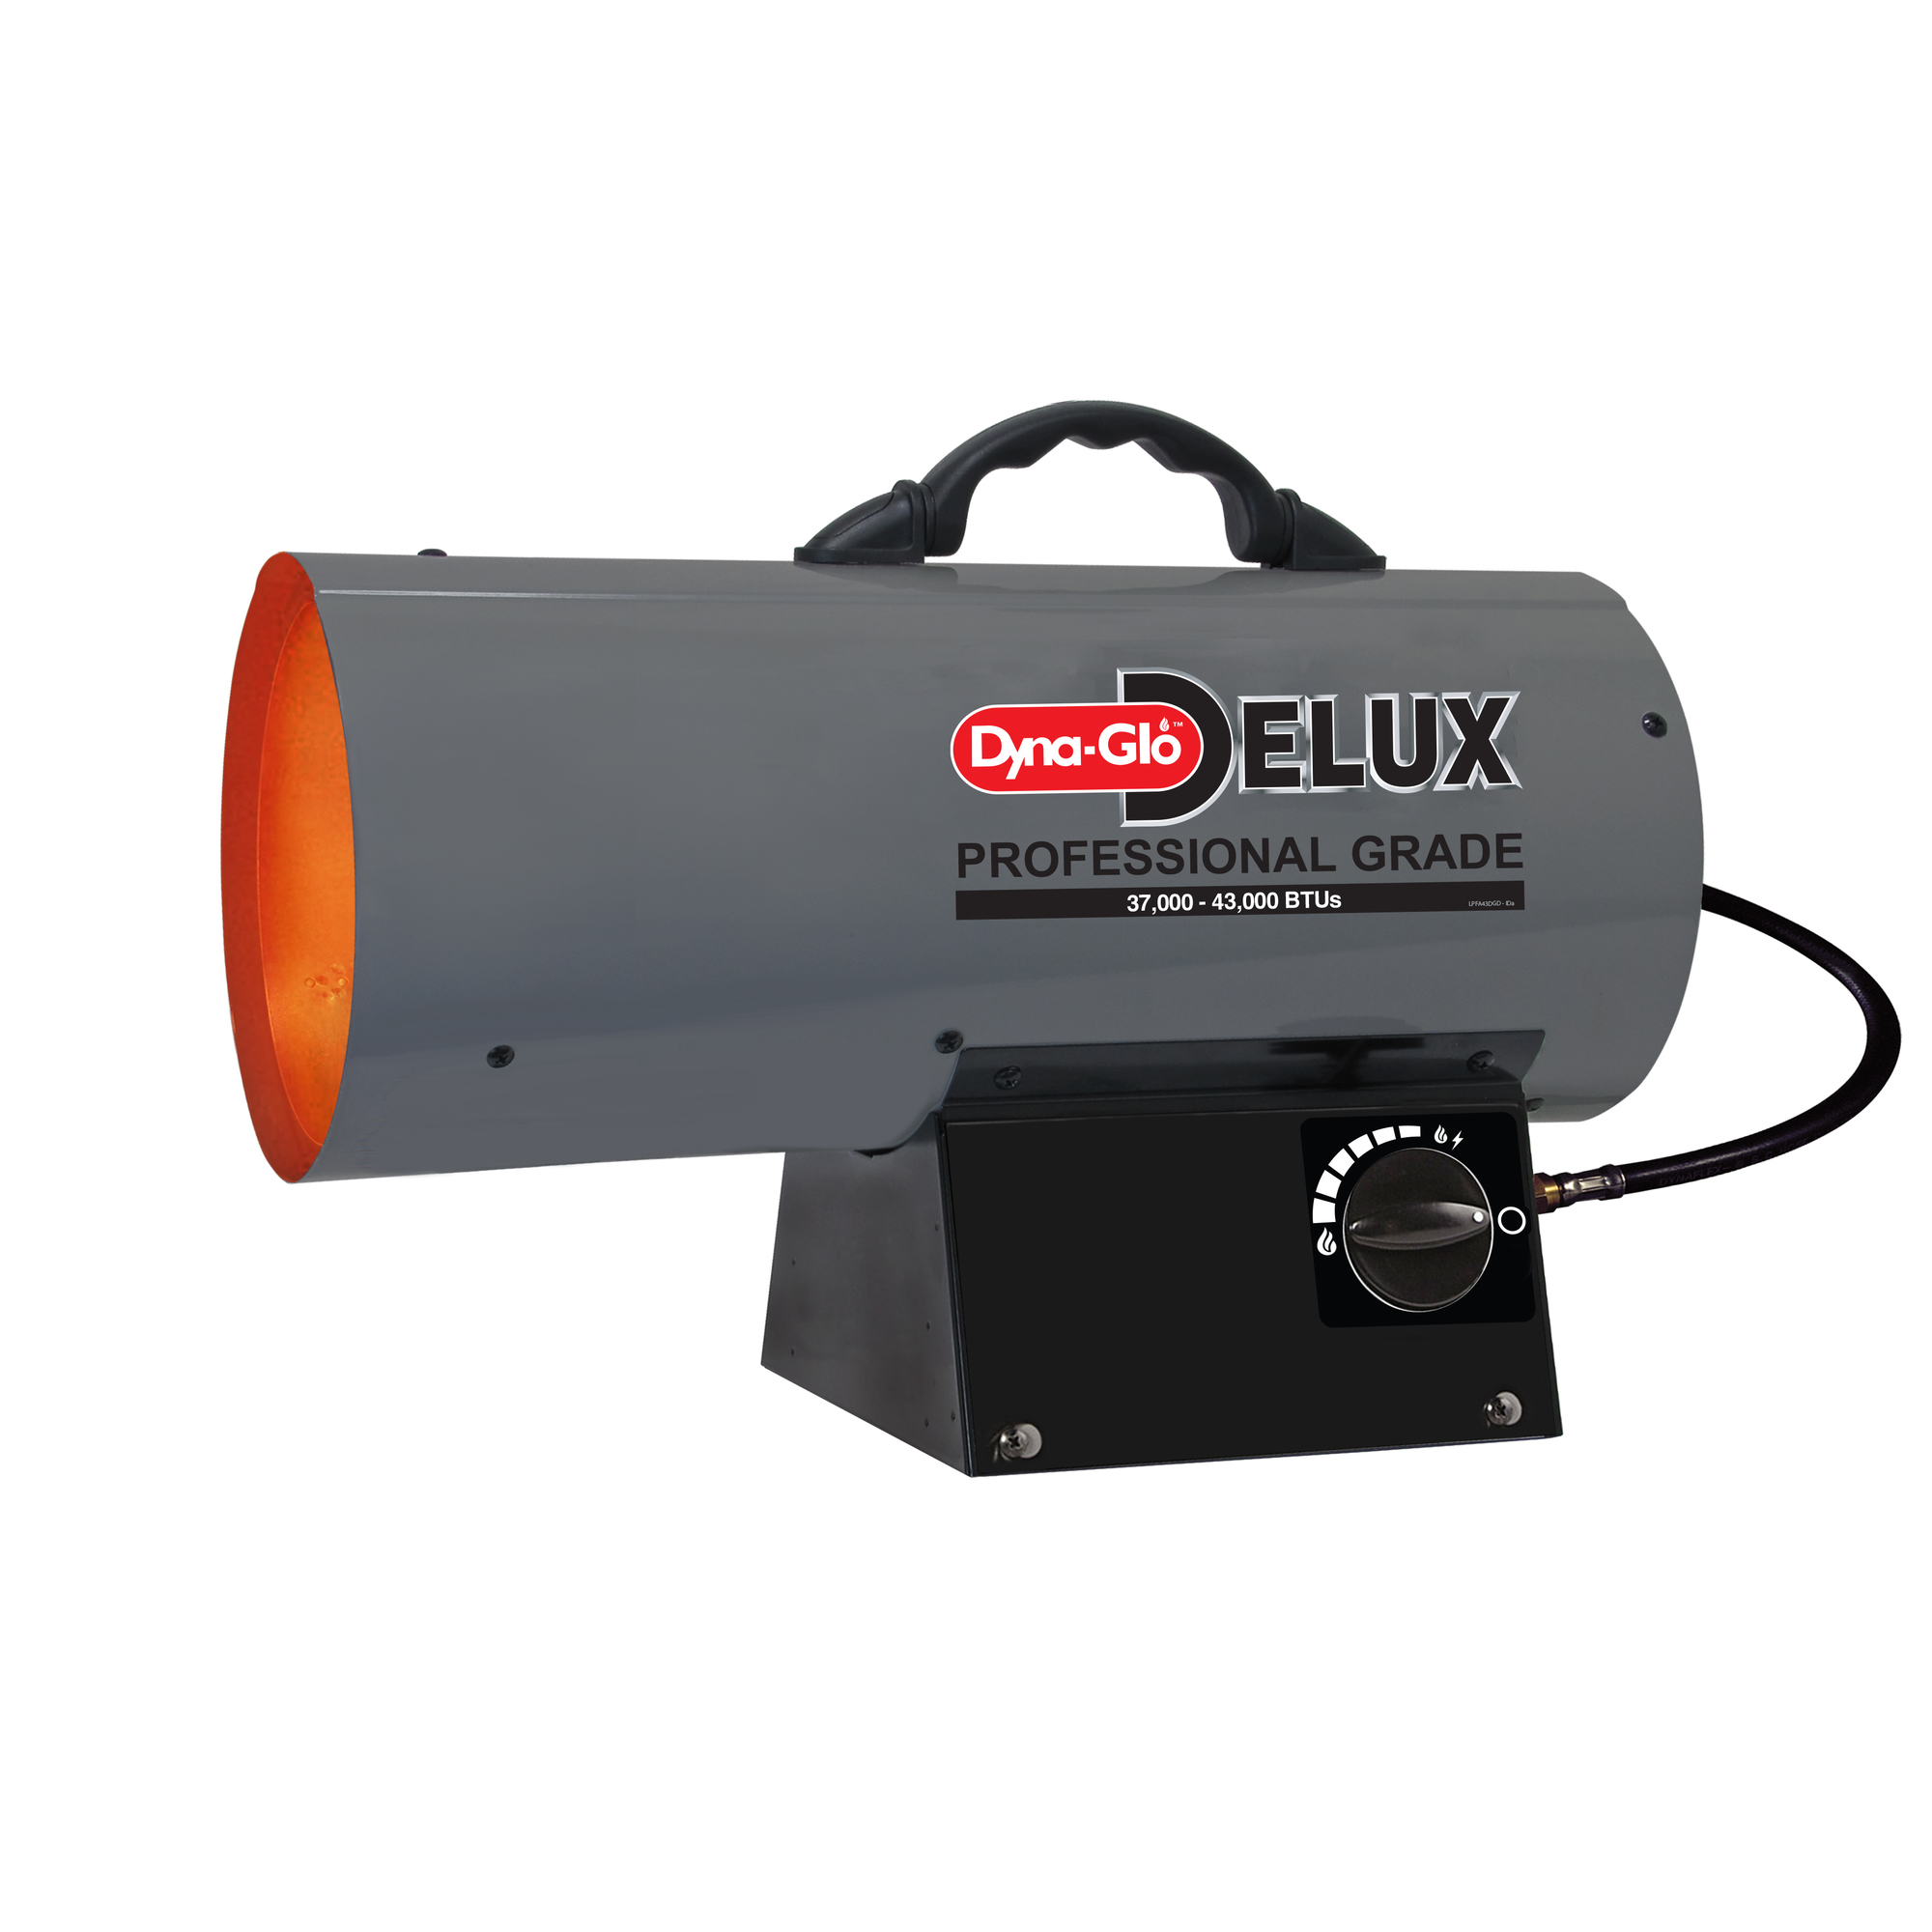 Dyna-Glo Delux, 43000-BTU Forced Air Heater - LP, Fuel Type Propane, Max. Heat Output 43000 Btu/hour, Model LPFA43DGD